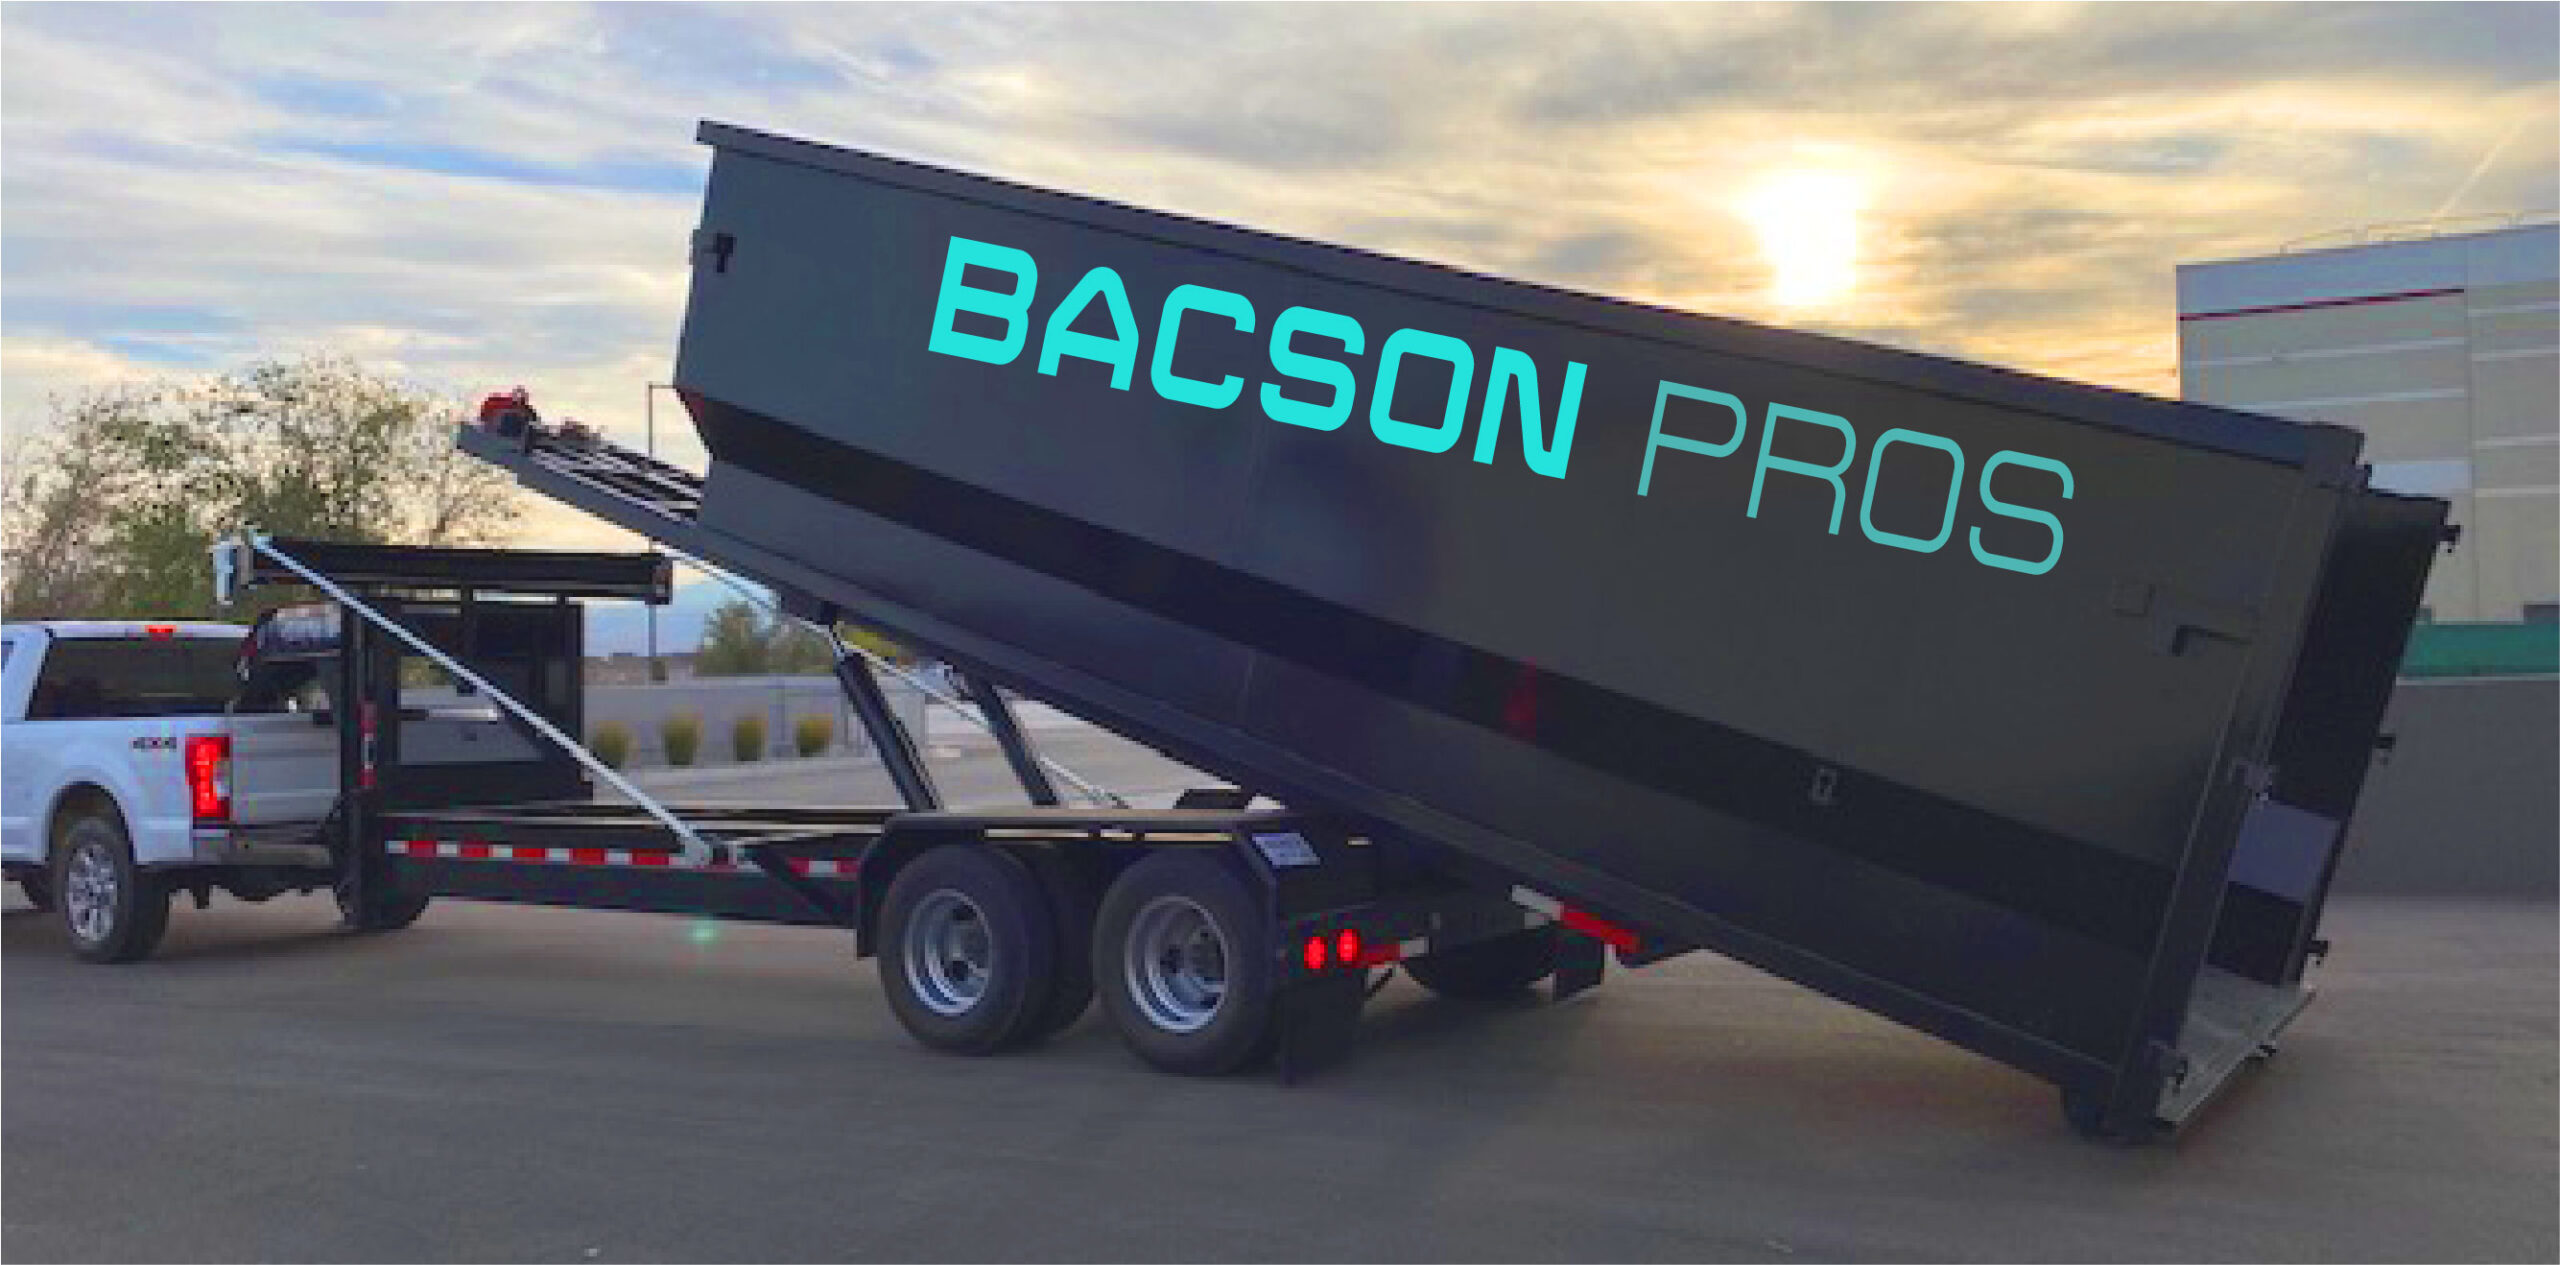 Bacson Pros dumpster rentals